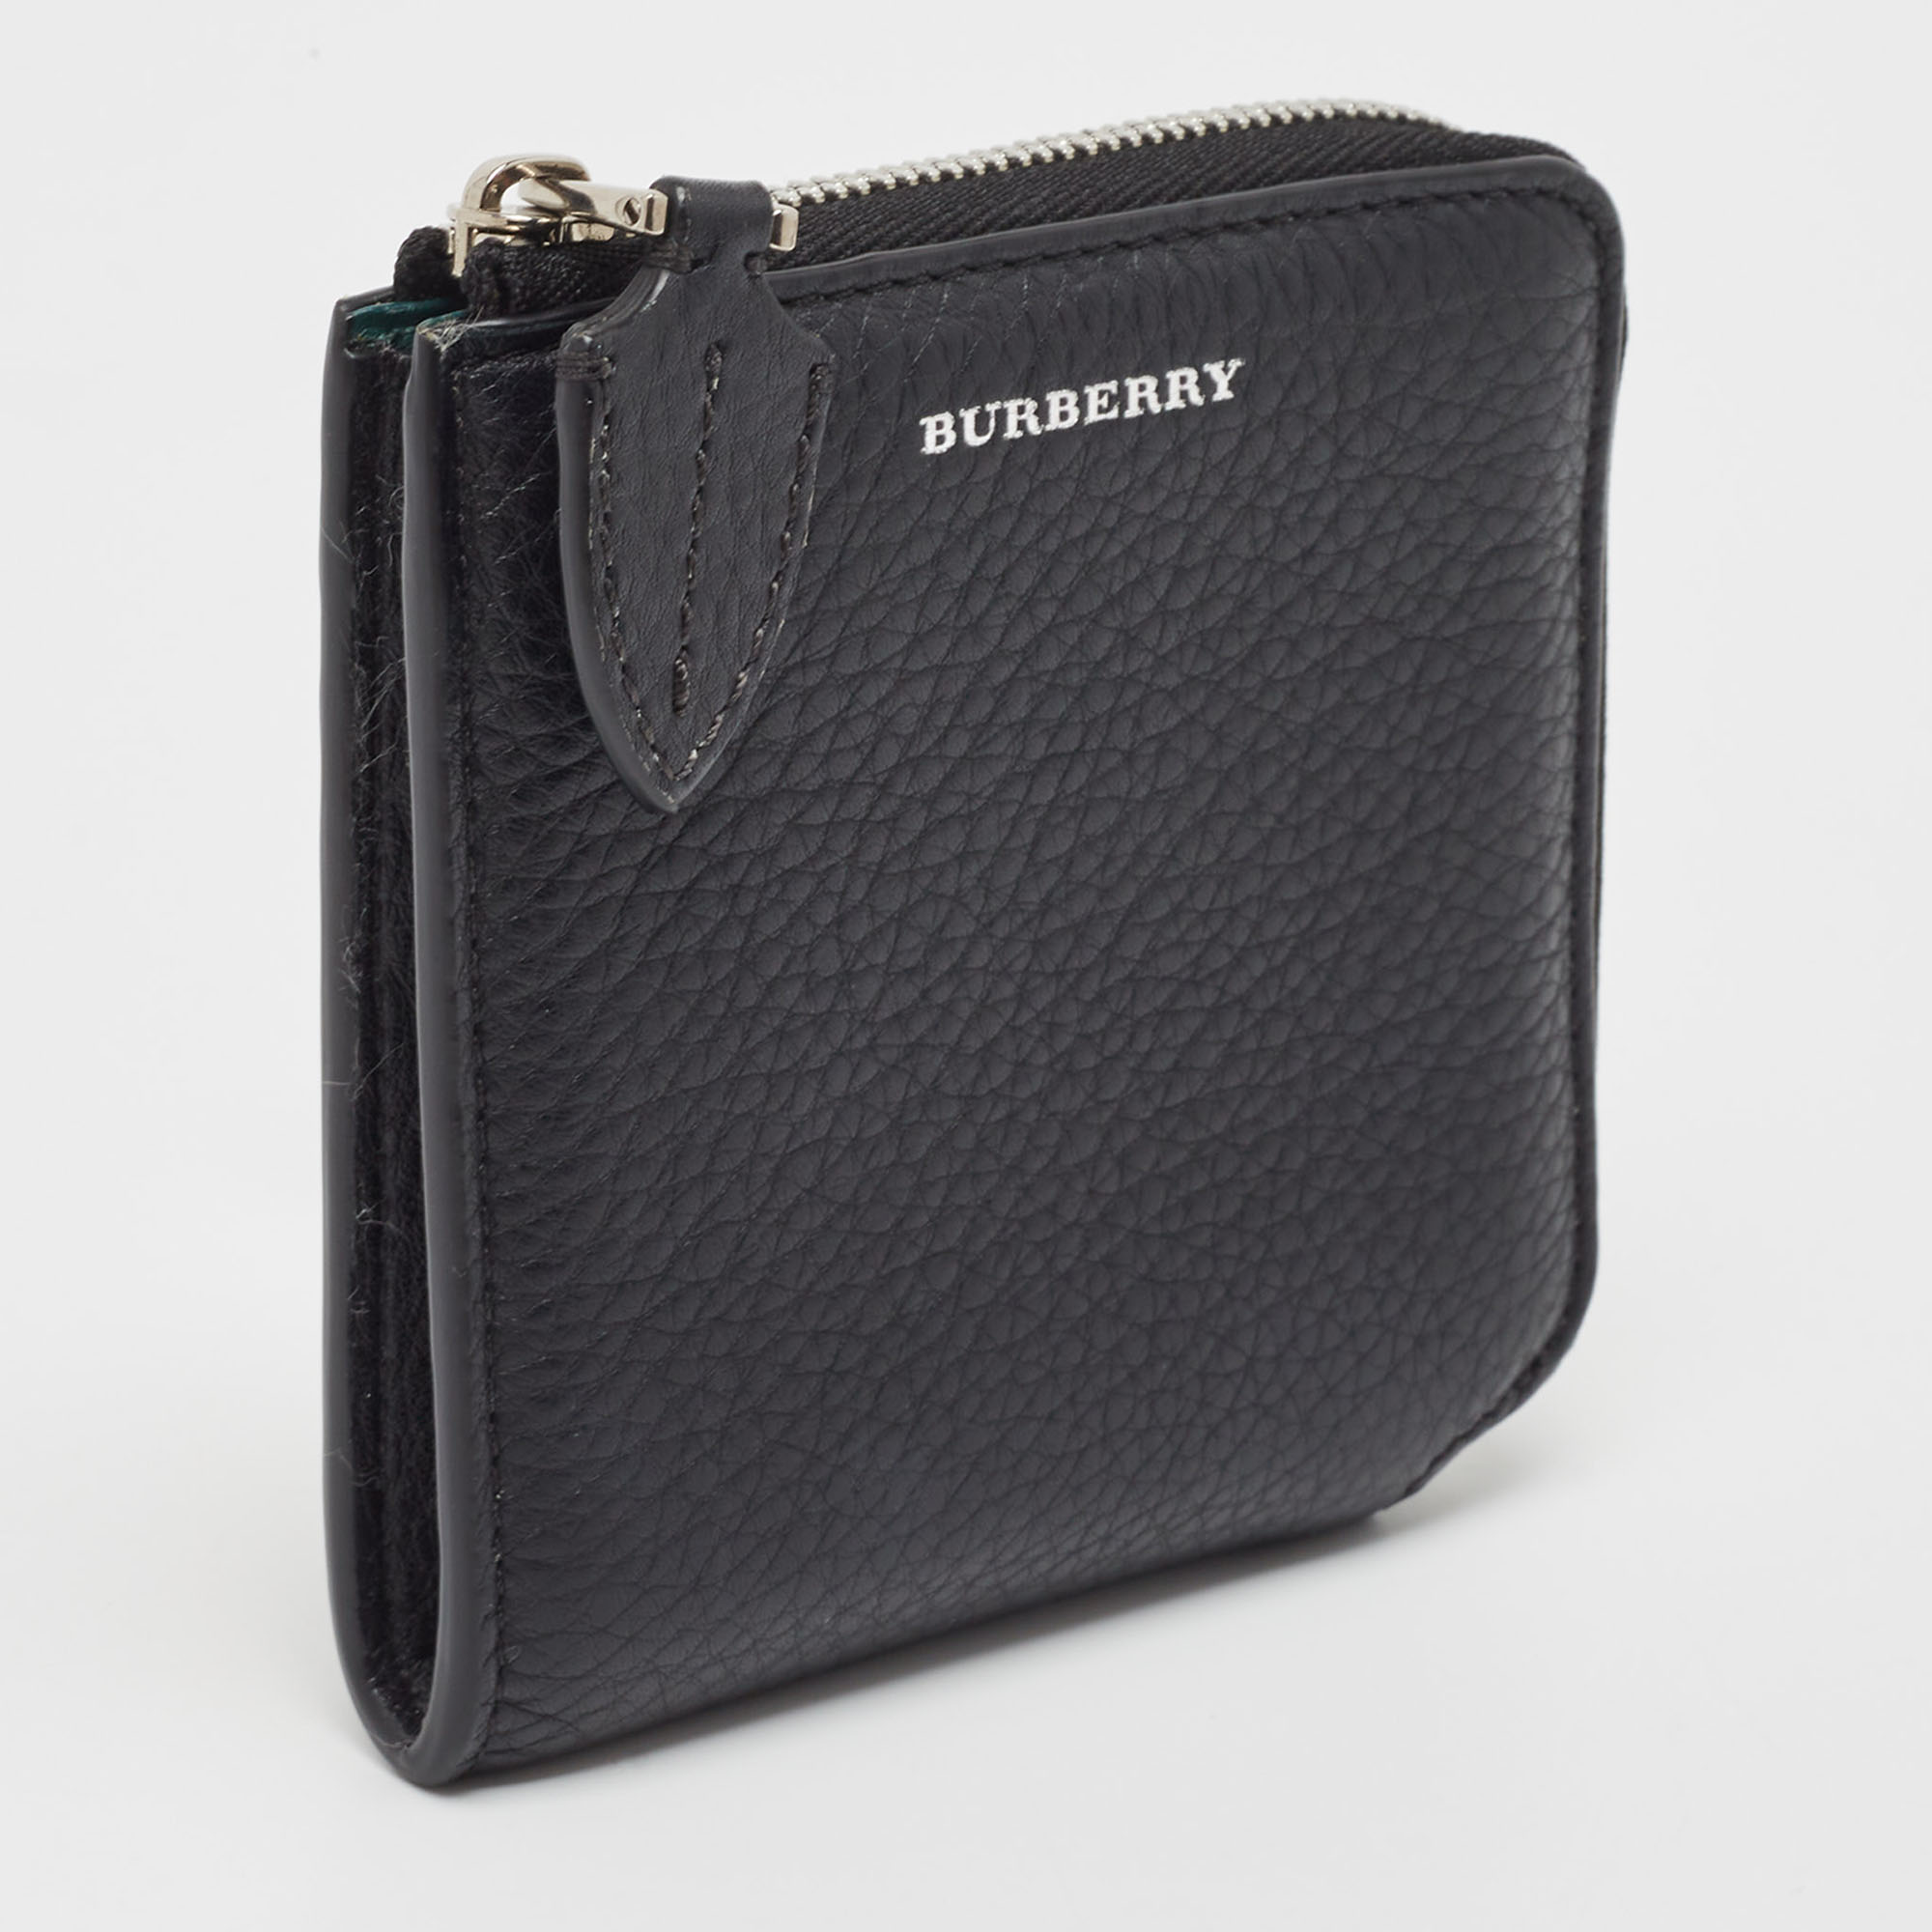 Burberry Black Leather Zip Around Compact Wallet